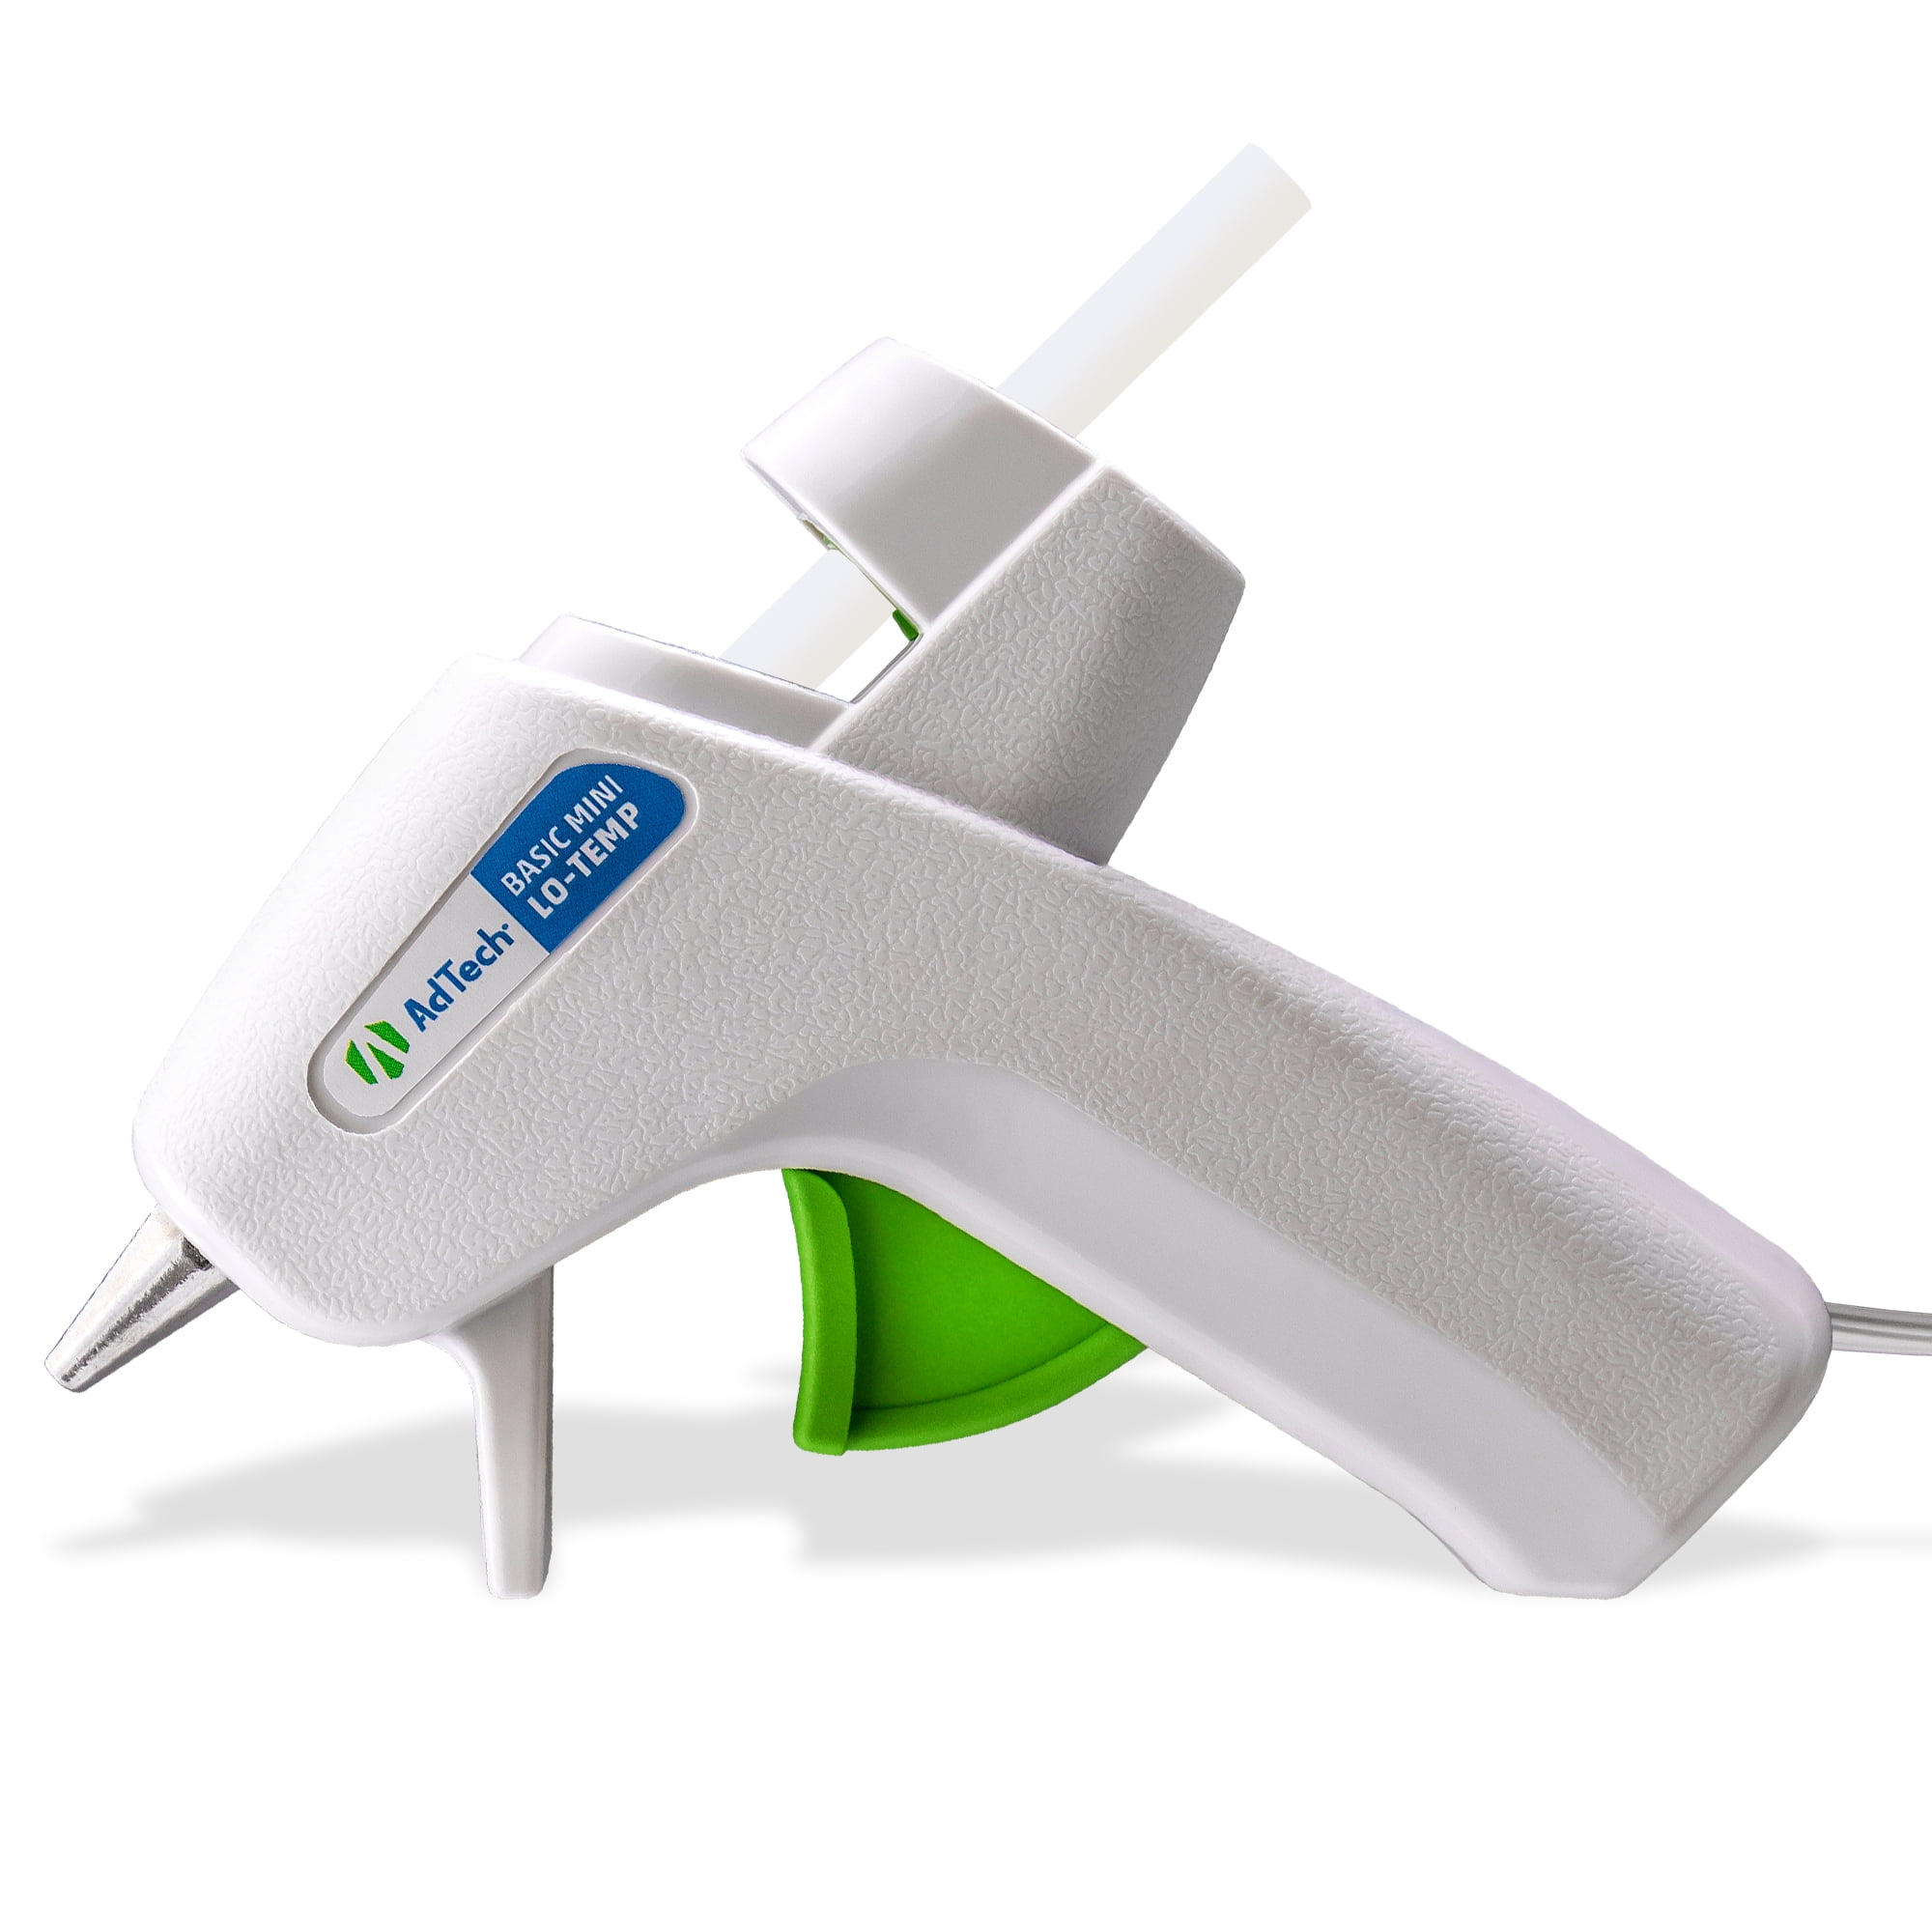 AdTech White Mini Glue Gun - Low Temperature Precision Crafting Tool 